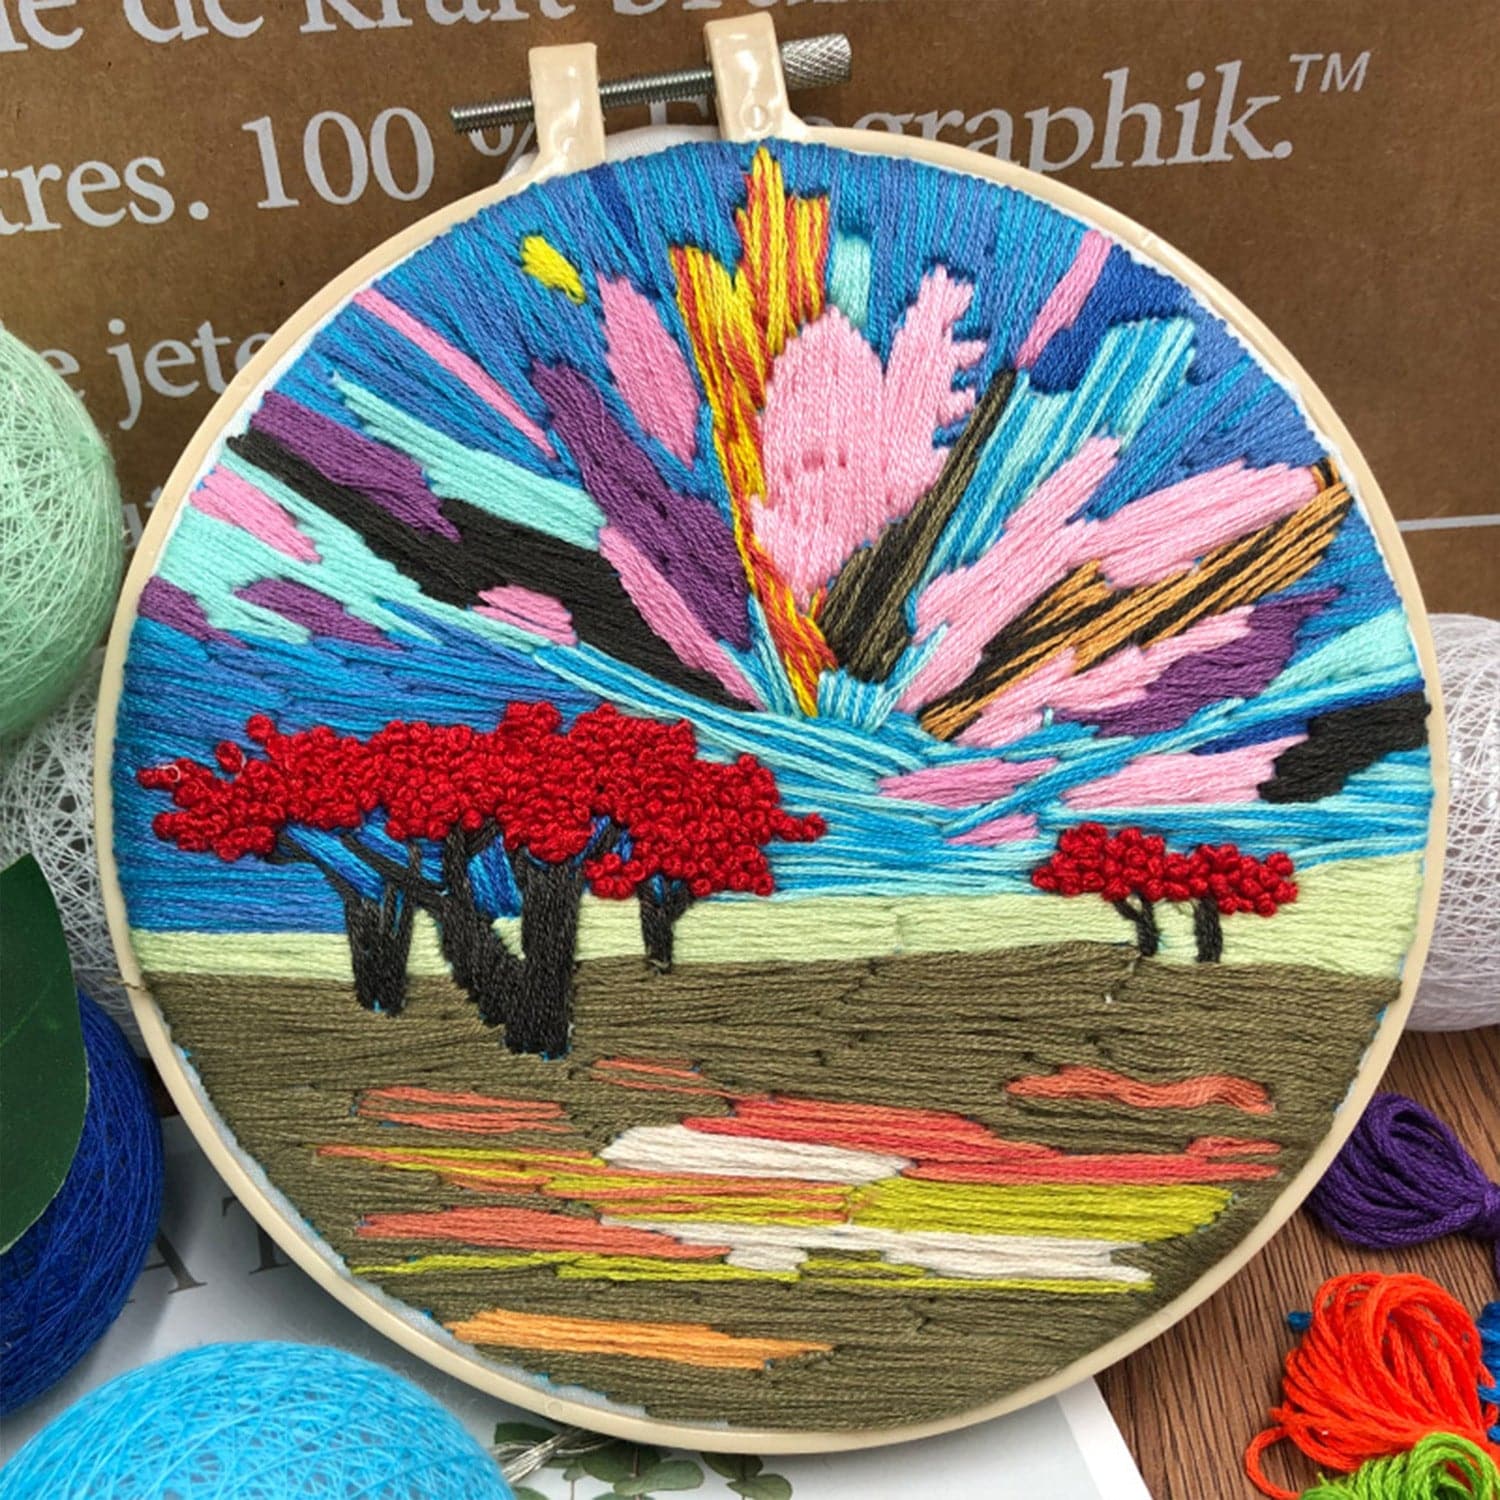 Landscape - Embroidery ktclubs.com